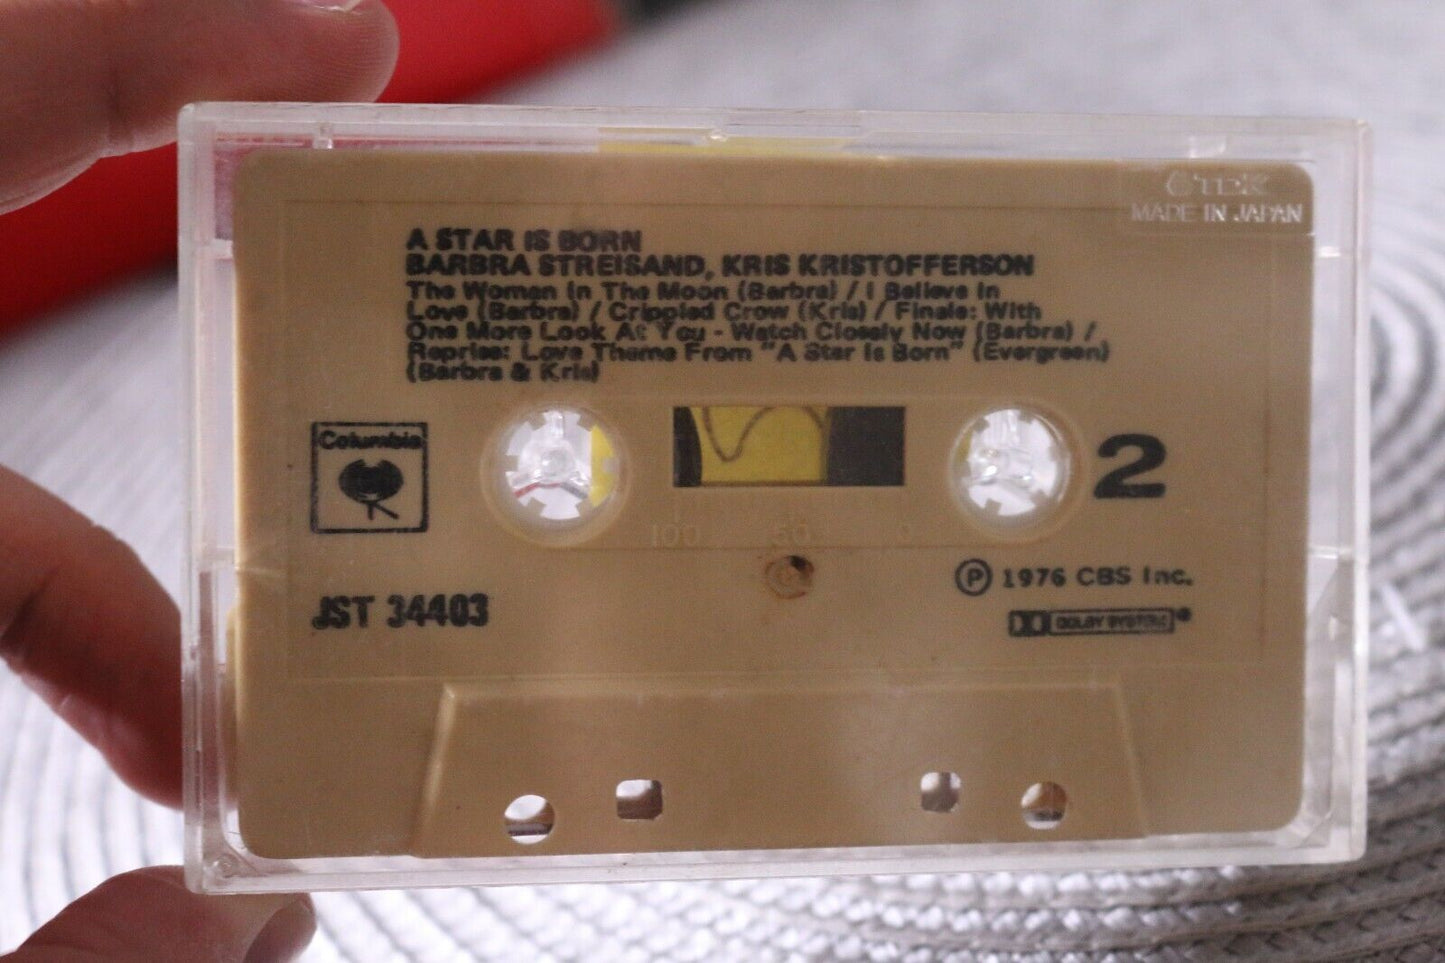 A Star Is Born Vhs Video Cassette Tape Barbra Streisand Kris Kristofferson